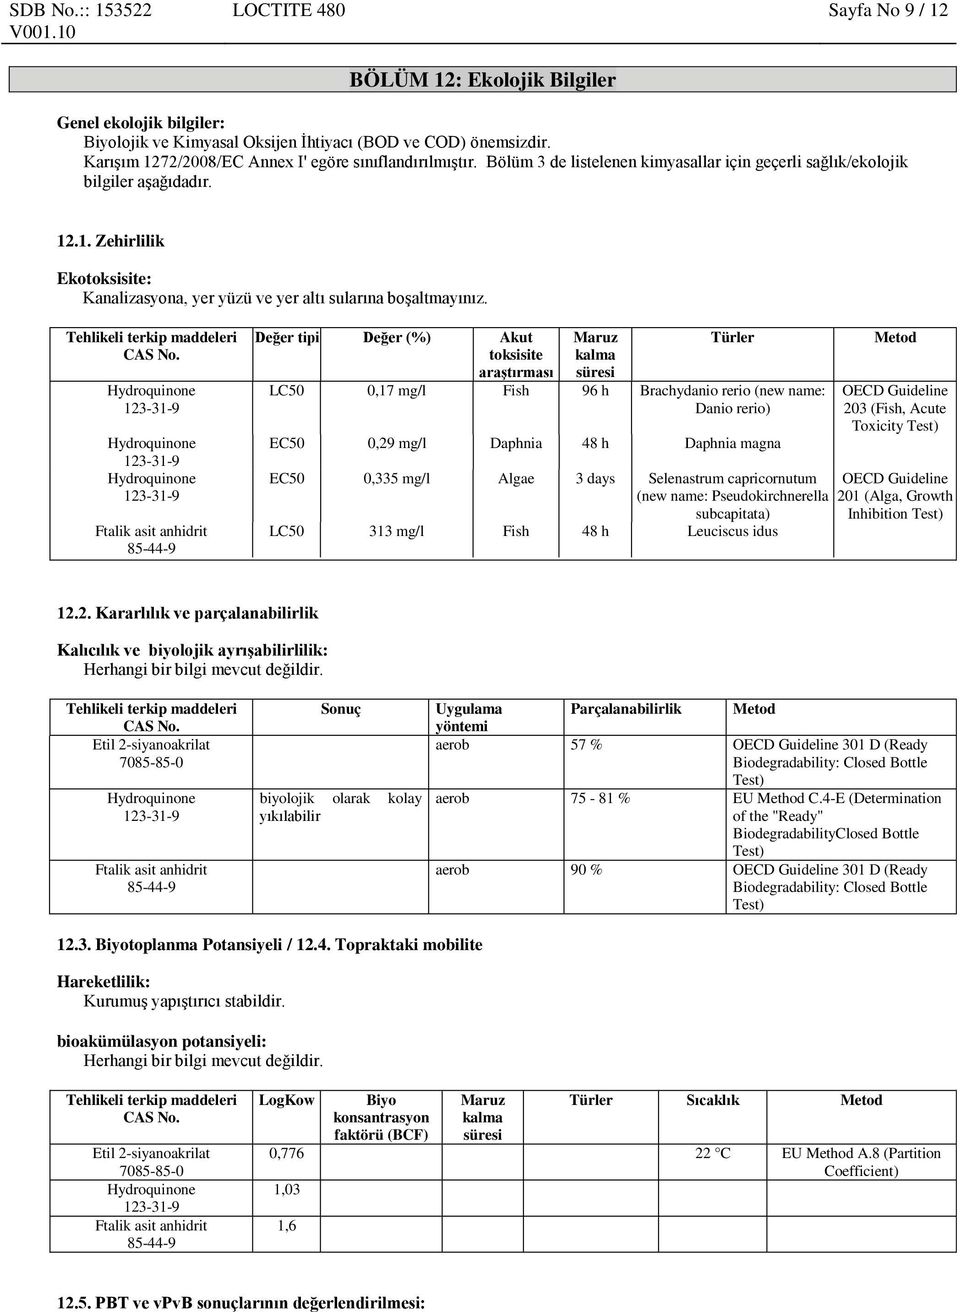 Değer tipi Değer (%) Akut toksisite araştırması Maruz kalma Türler LC50 0,17 mg/l Fish 96 h Brachydanio rerio (new name: Danio rerio) EC50 0,29 mg/l Daphnia 48 h Daphnia magna Metod OECD Guideline